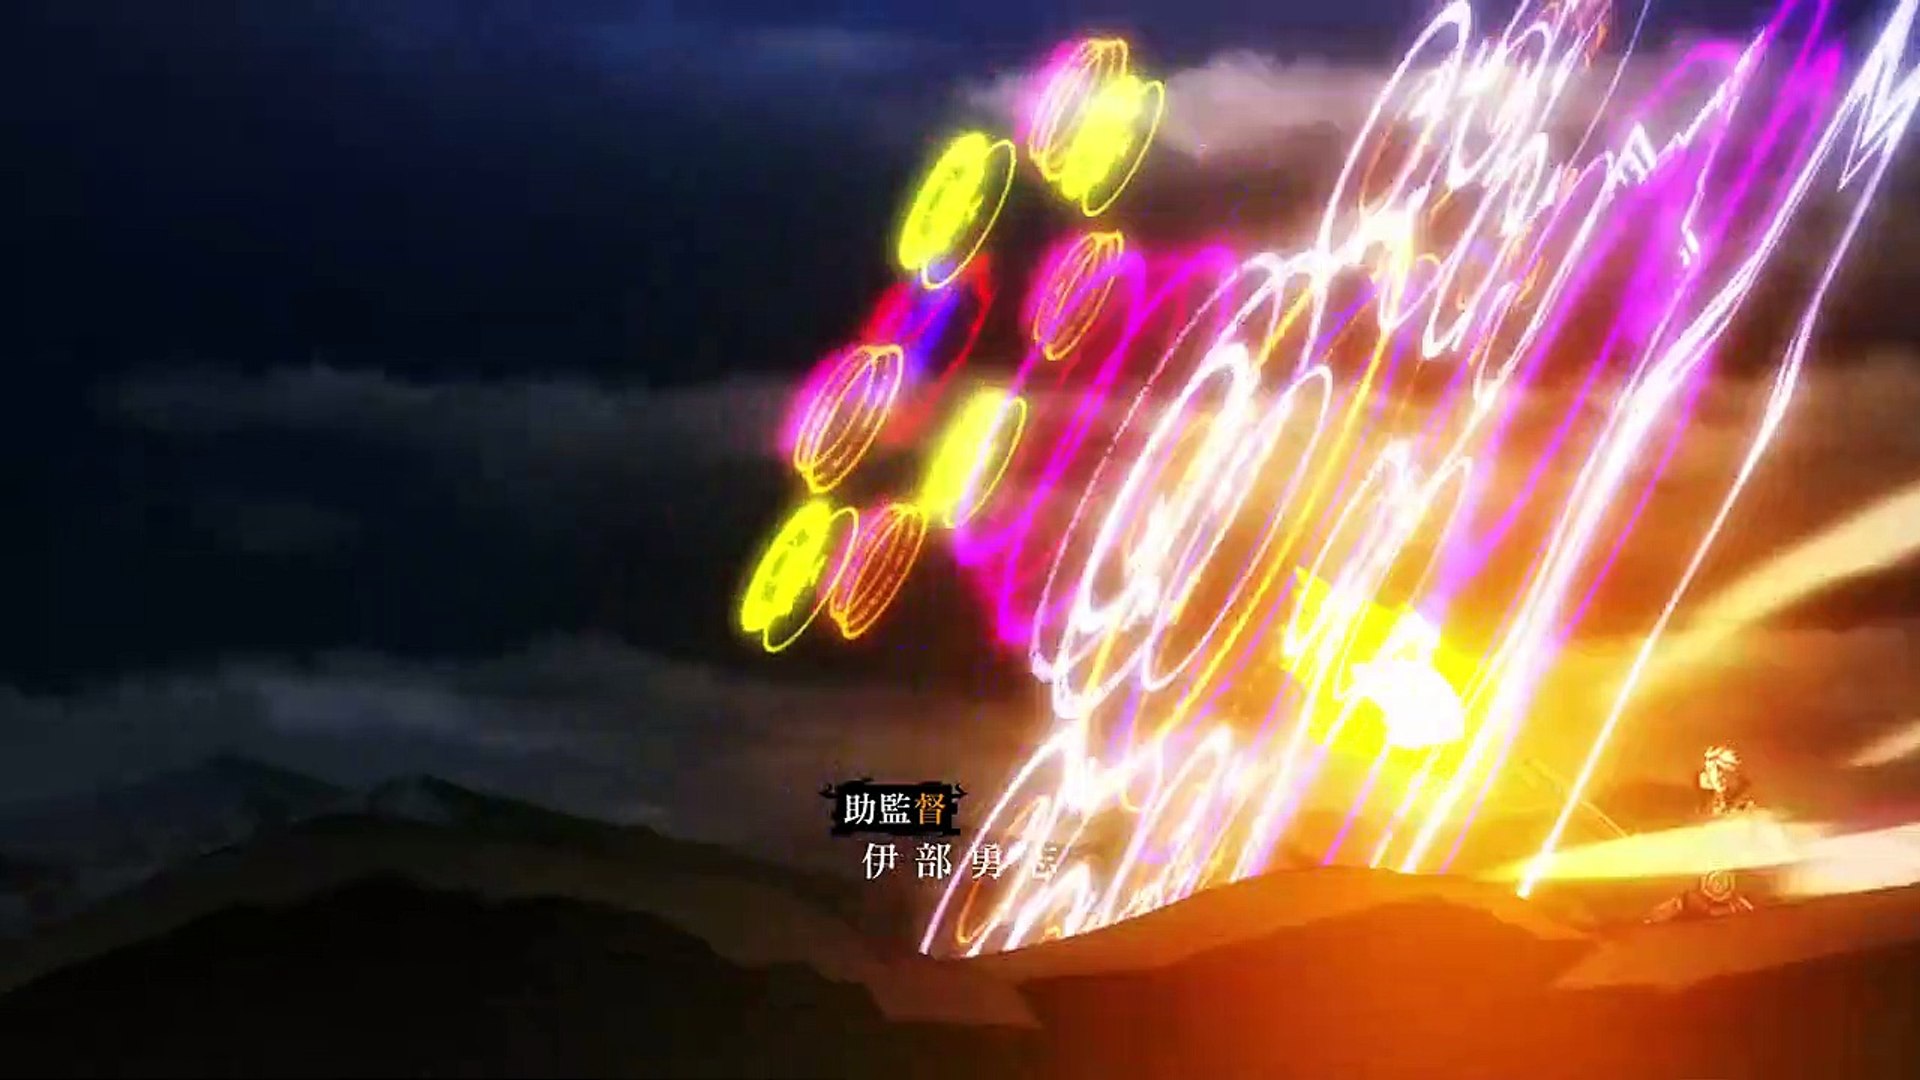 episode 8 part 3 #ardmeteor #lydia #animemagic #animeoverpower